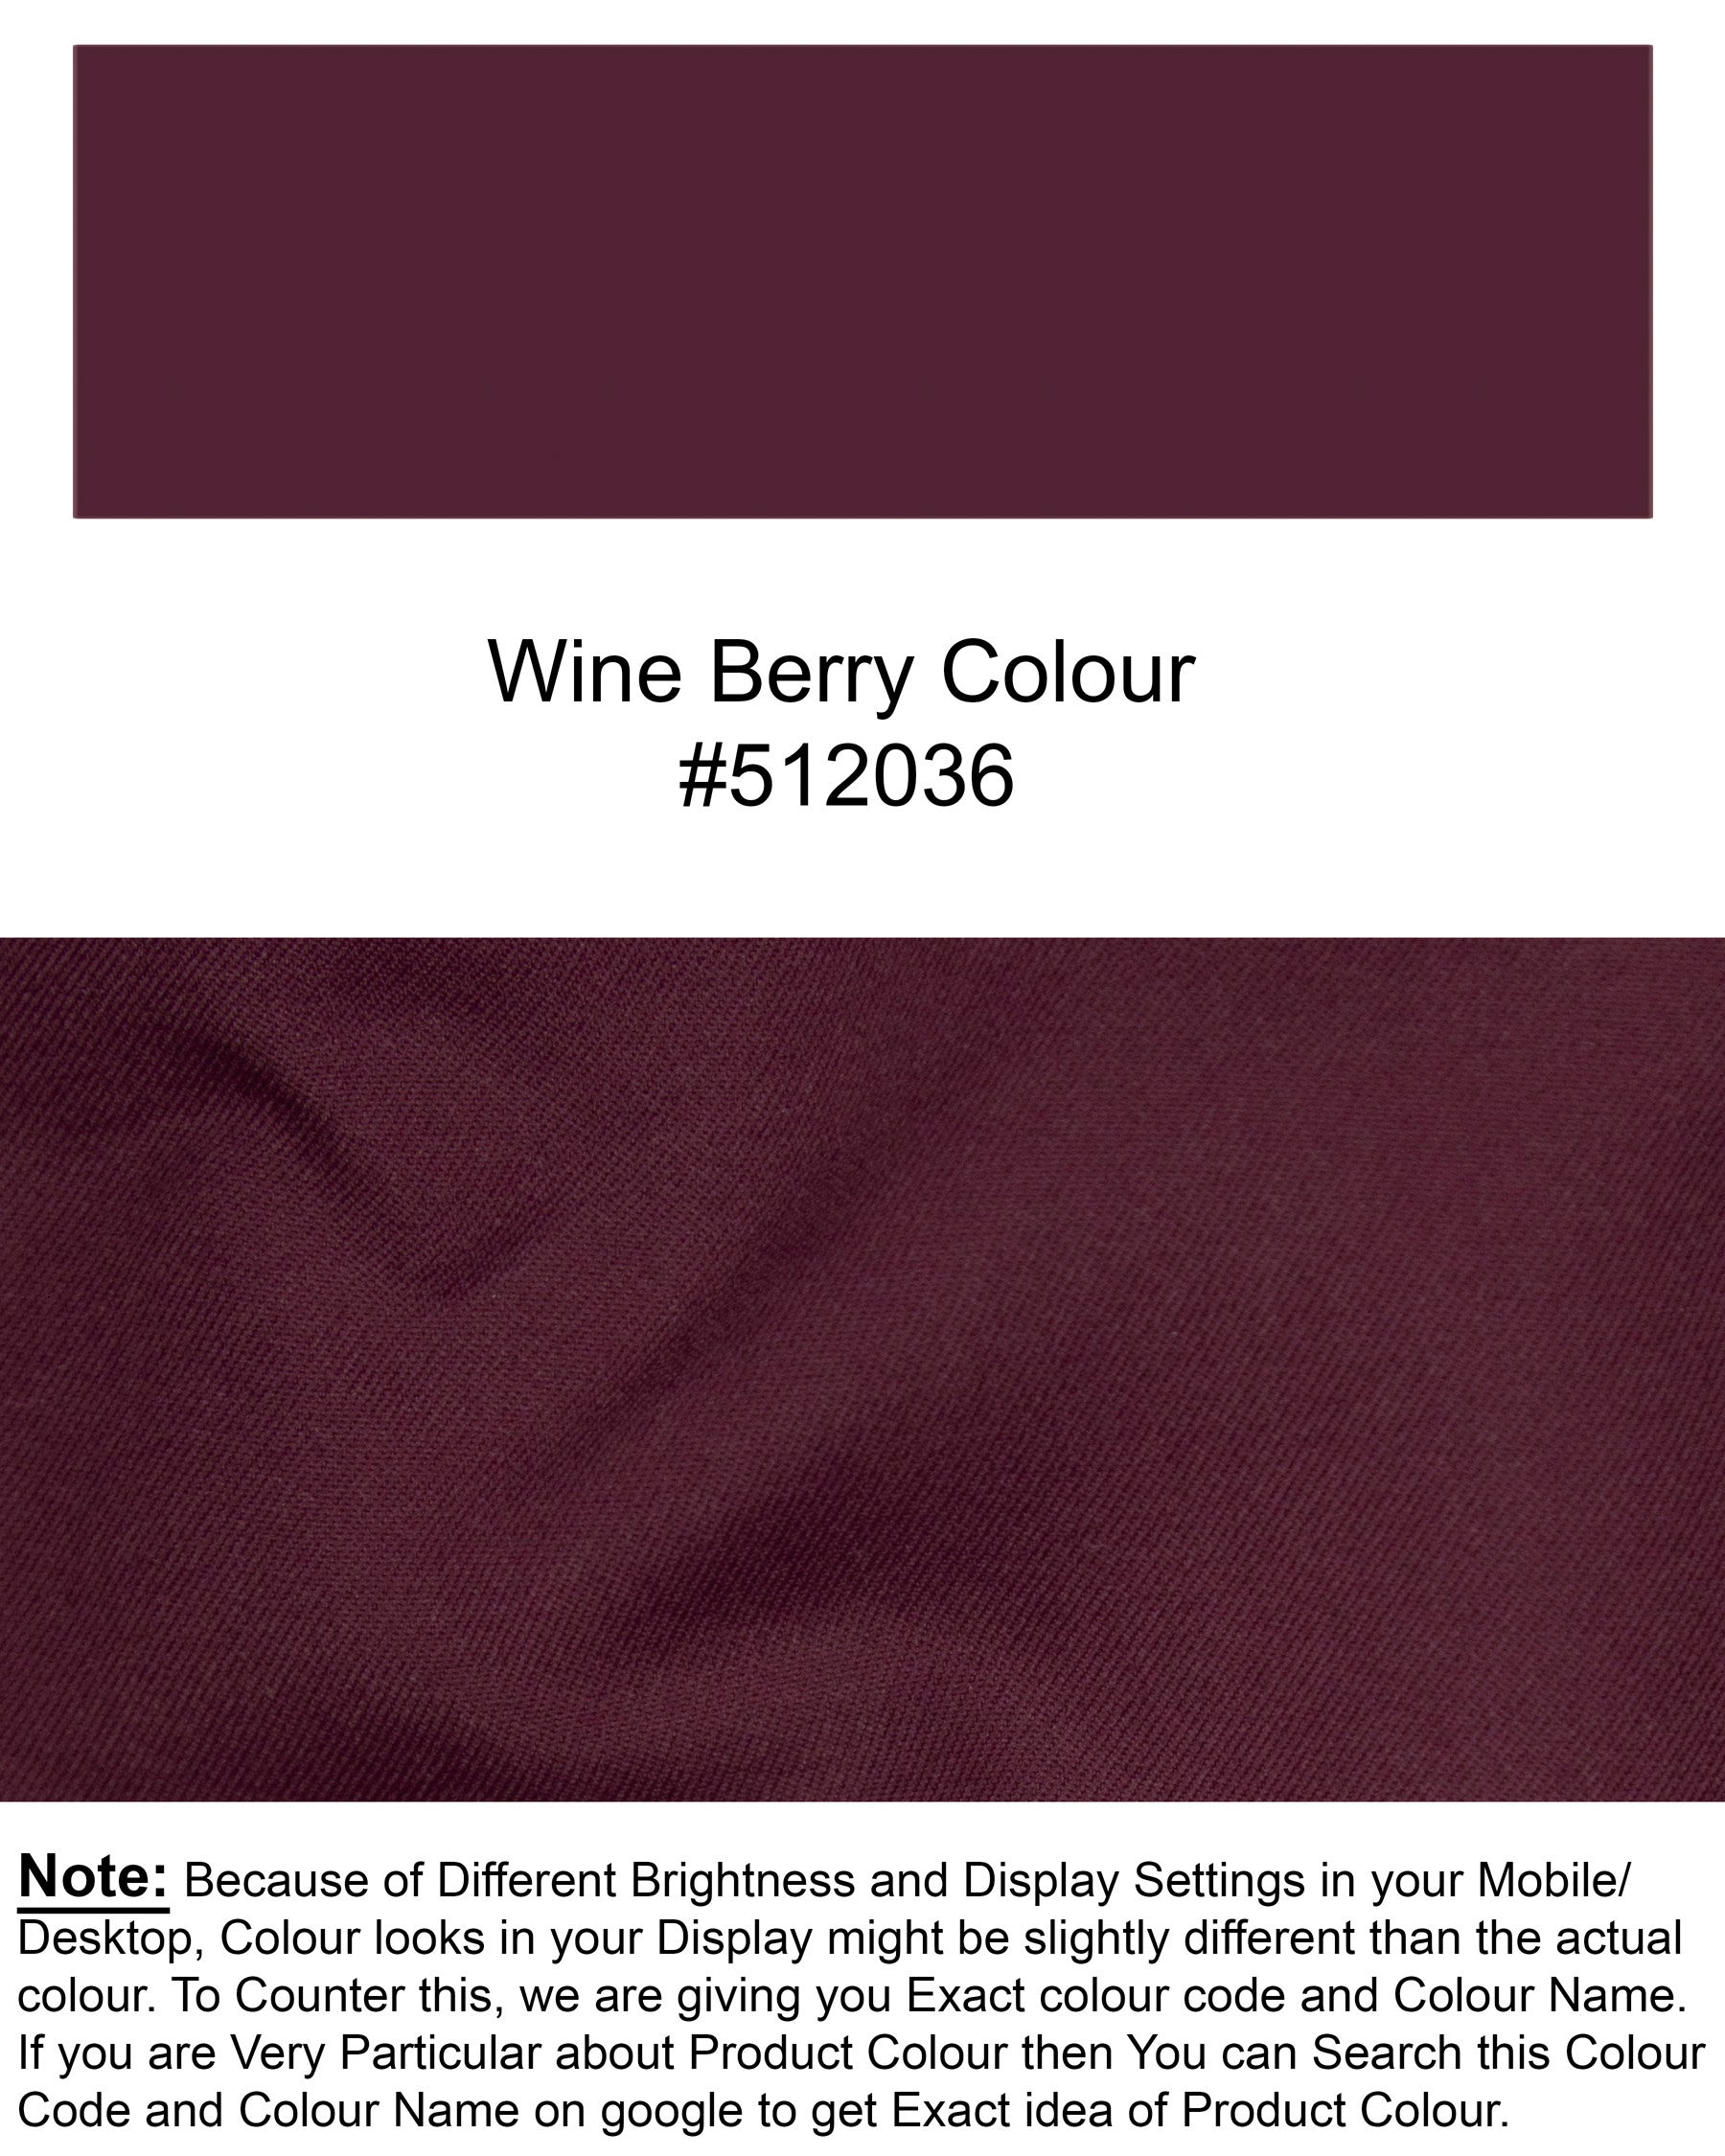 Wine Berry Woolrich Tuxedo Suit ST1271-BKL-40, ST1271-BKL-36, ST1271-BKL-42, ST1271-BKL-38, ST1271-BKL-44, ST1271-BKL-46, ST1271-BKL-48, ST1271-BKL-50, ST1271-BKL-52, ST1271-BKL-54, ST1271-BKL-56, ST1271-BKL-58, ST1271-BKL-60